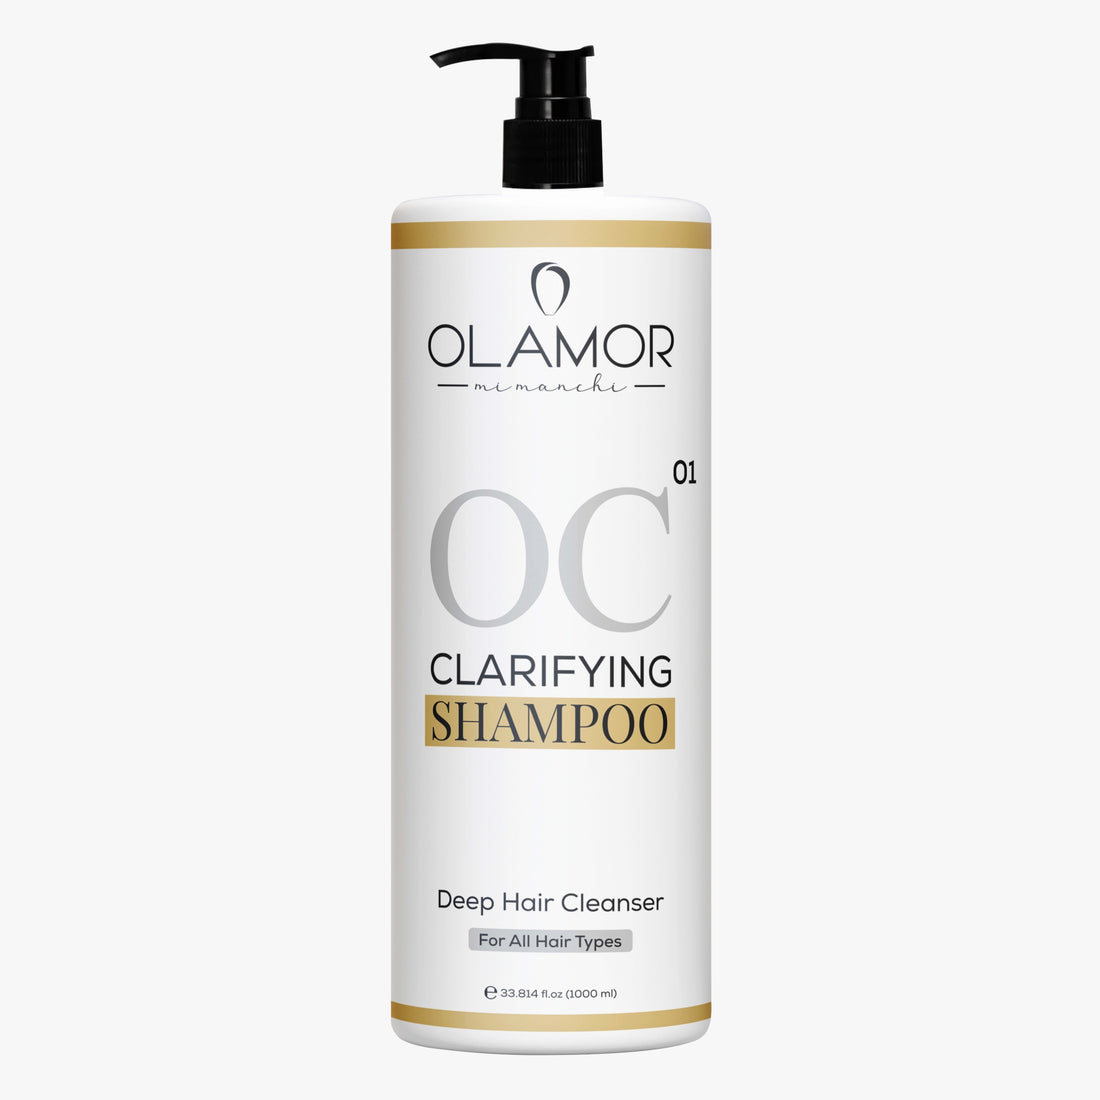 Olamor OC 01 Clarifying Shampoo - 1 L